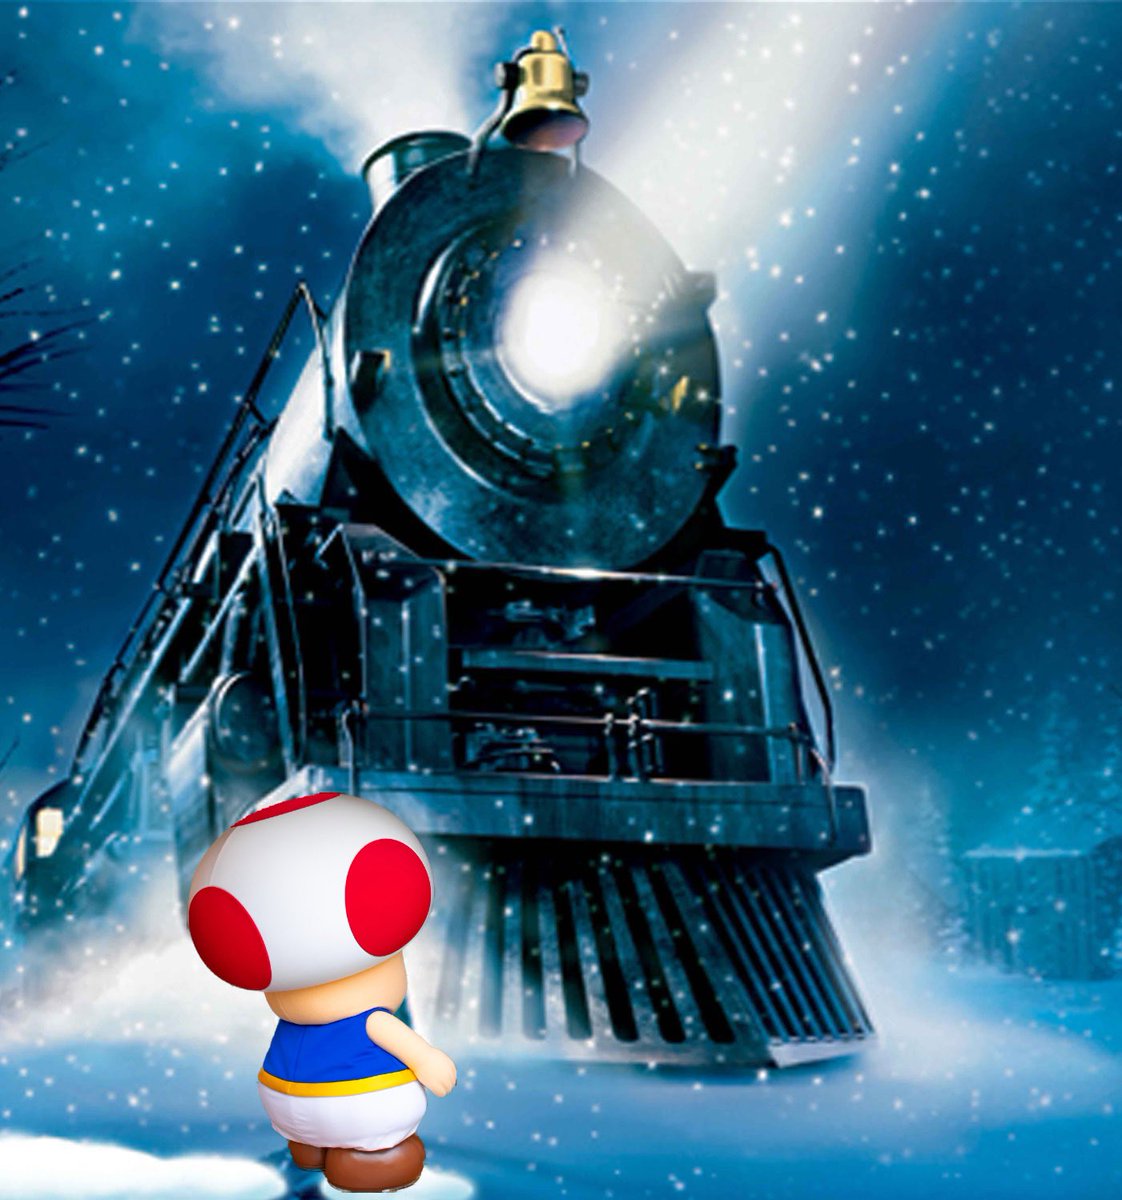 Sayyyyyy…. this isn’t the Nintendo World Train ?!?!👀
#Polarexpress